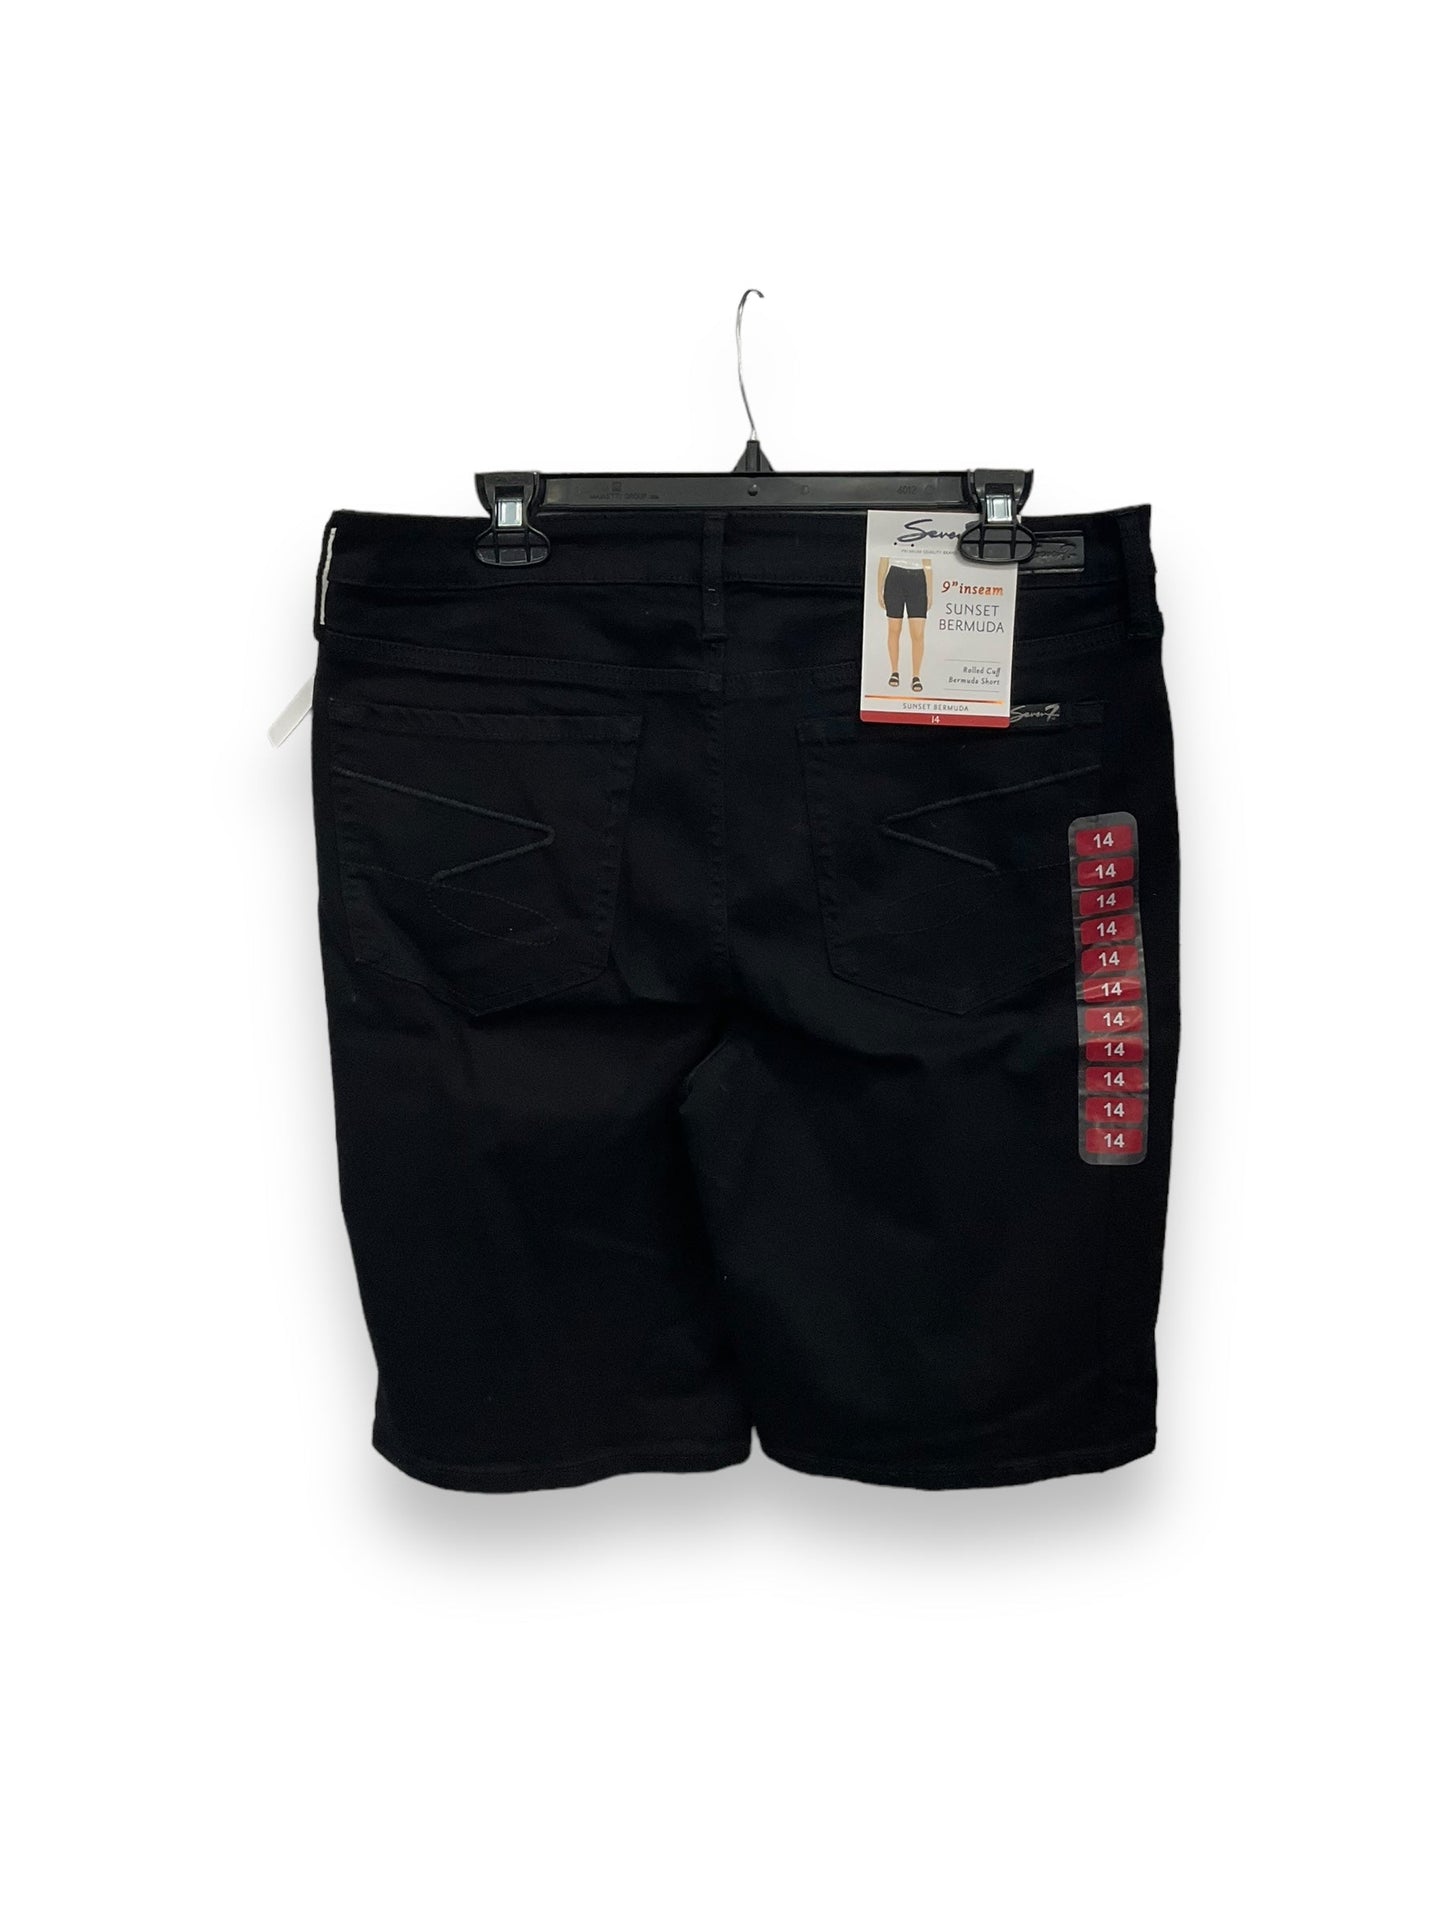 Black Shorts Seven 7, Size 14